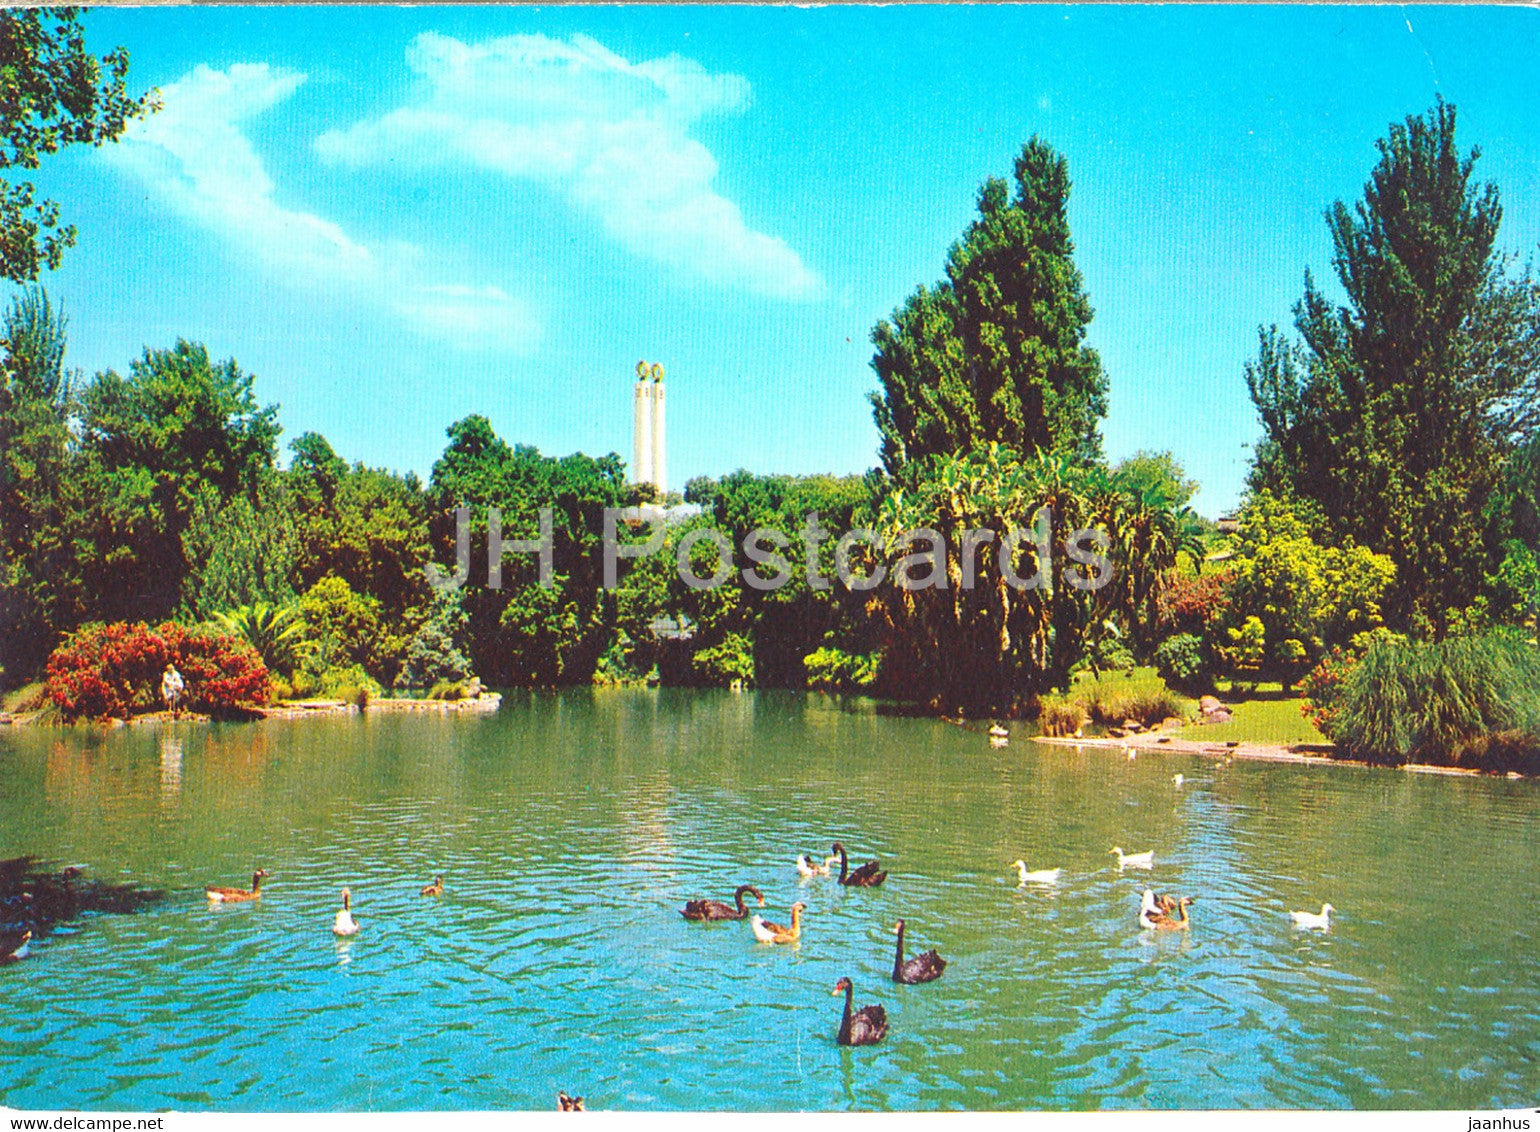 Lisbon - Lisboa - Lago do Parque Eduardo VII - Lake of the Edward VII Park - 205 - Portugal - unused - JH Postcards